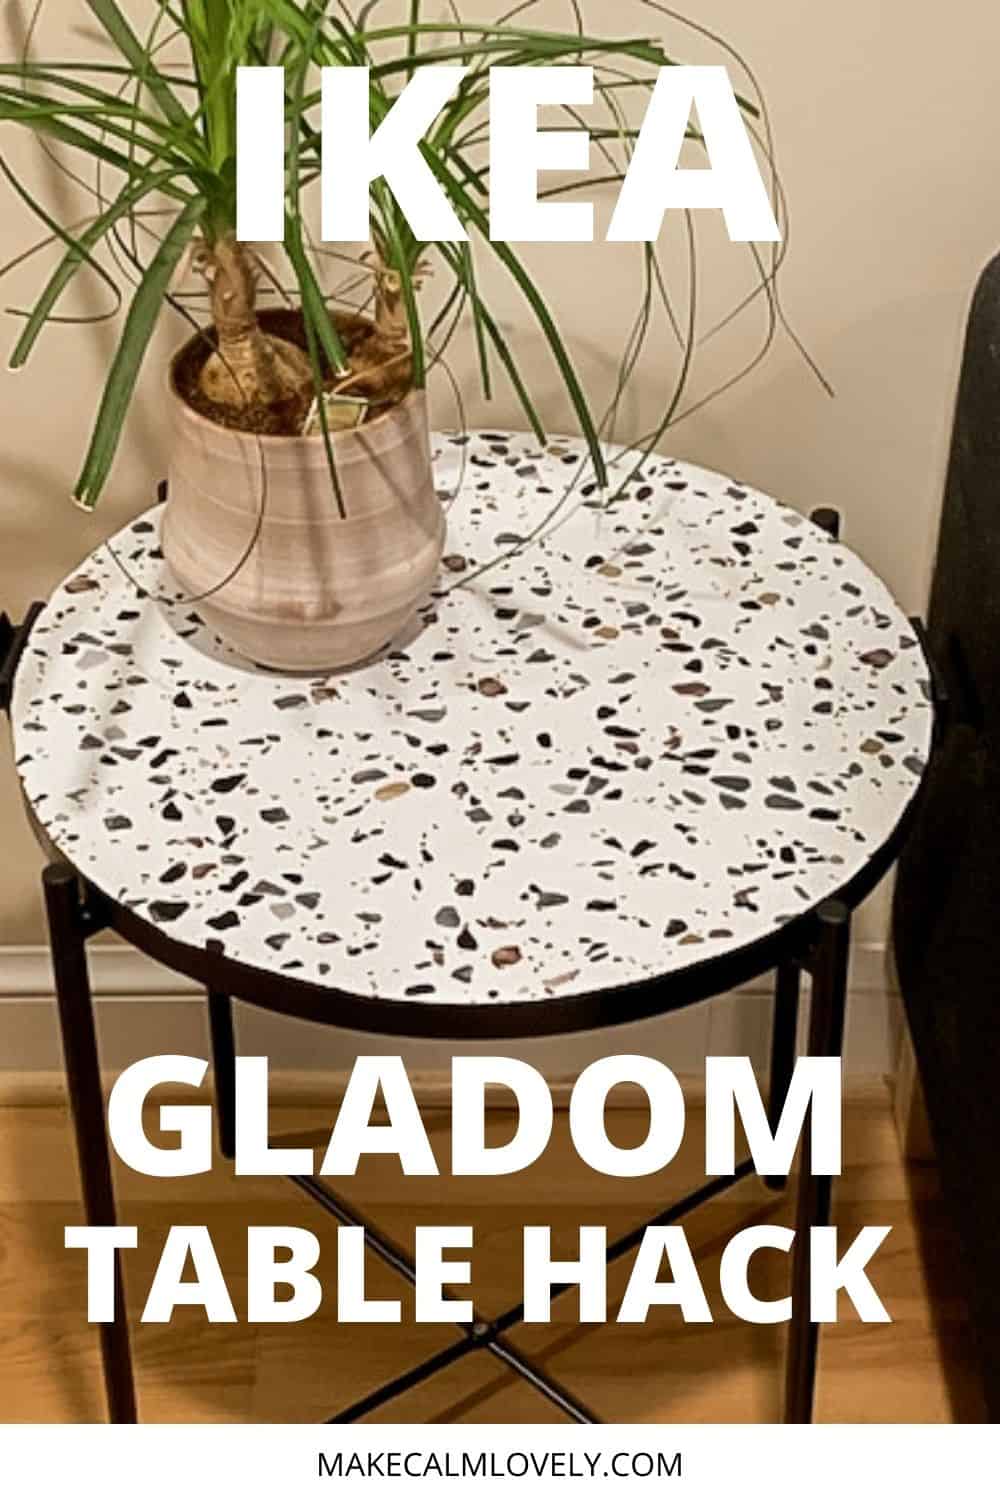 IKEA GLADOM TABLE HACK